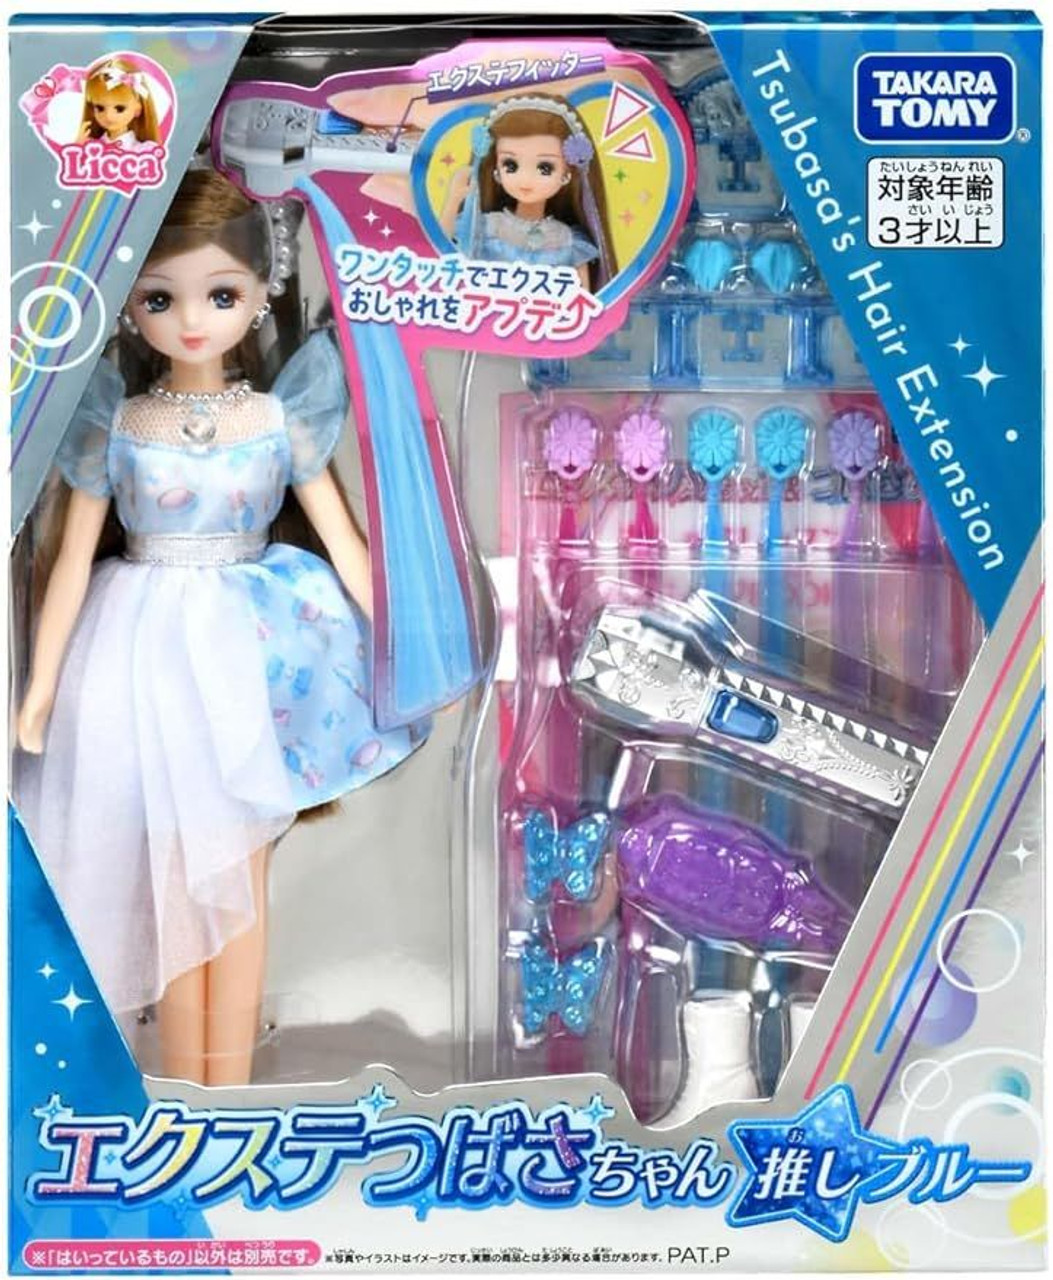 Takara Tomy Licca Doll Tsubasa`s Hair Extension (Blue)